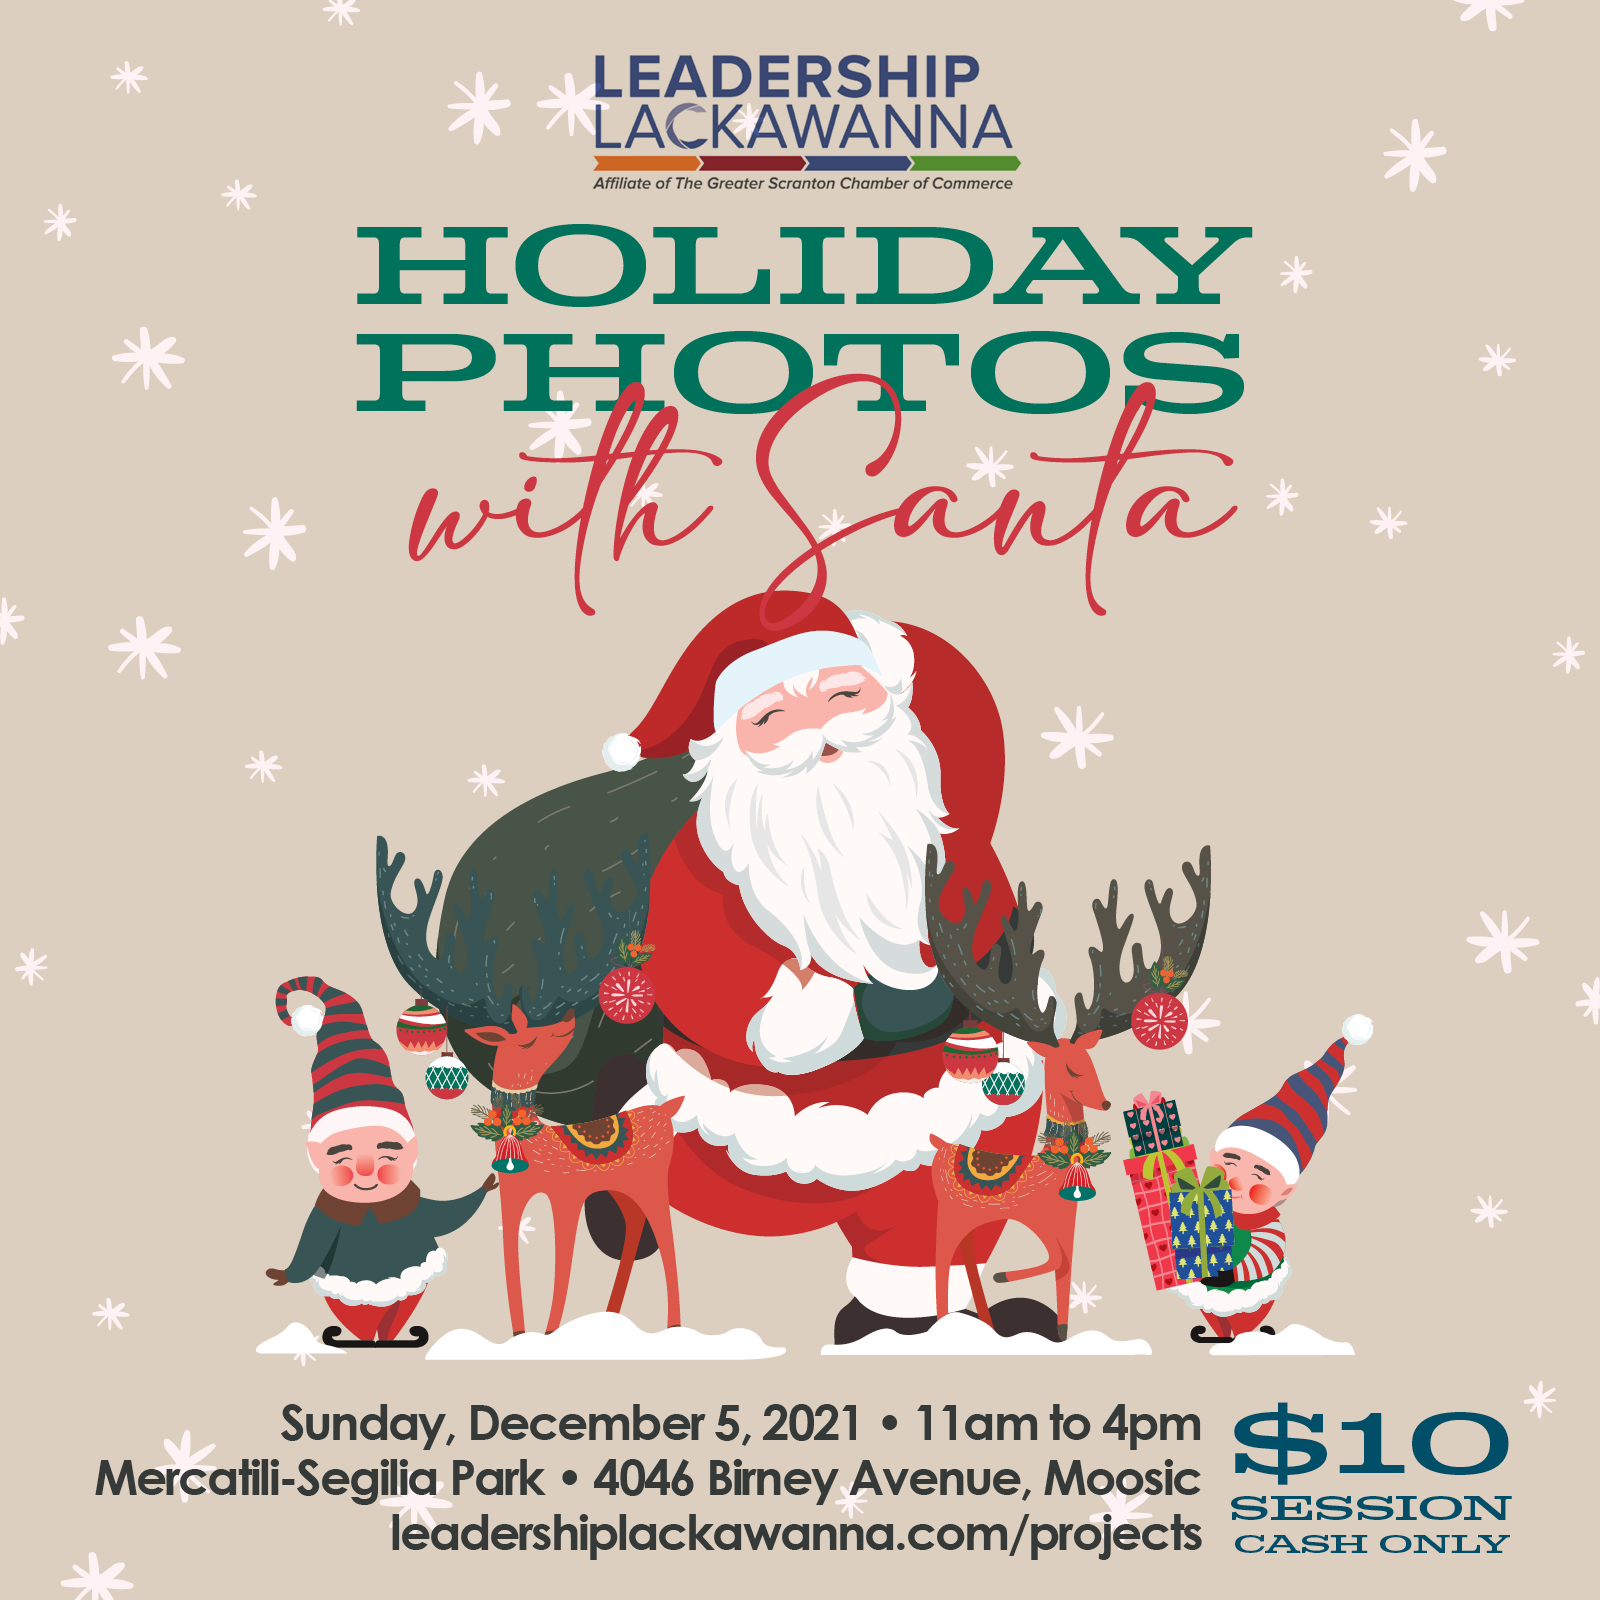 Leadership Lackawanna Holiday Photos with Santa